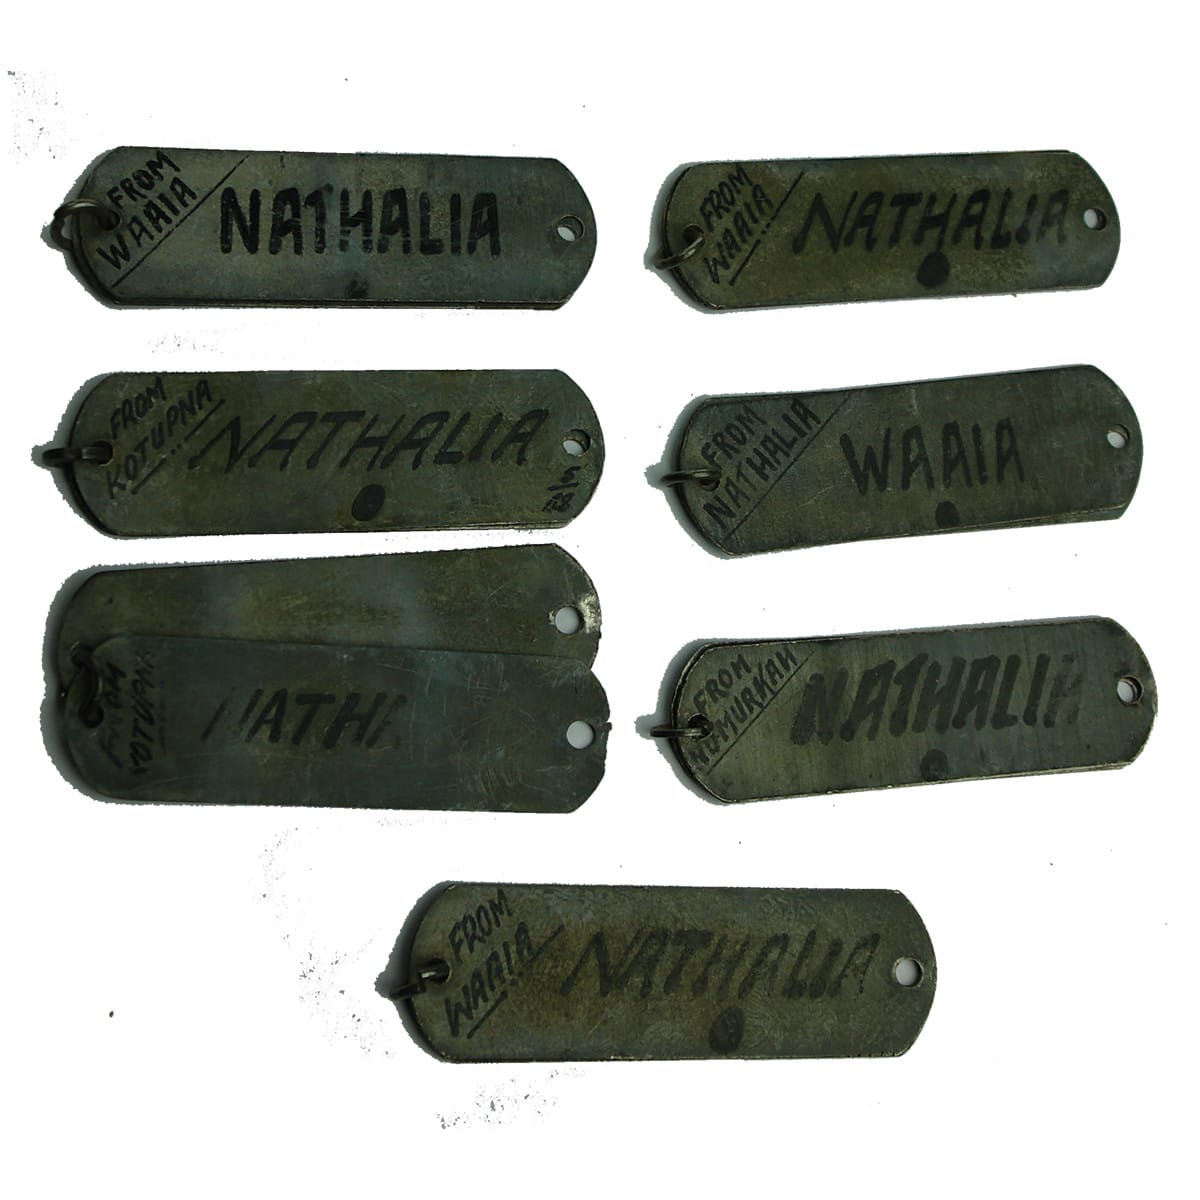 Tags. Australia Post Tags from Nathalia, Numurkah, Kotupna and Waaia. (Victoria)